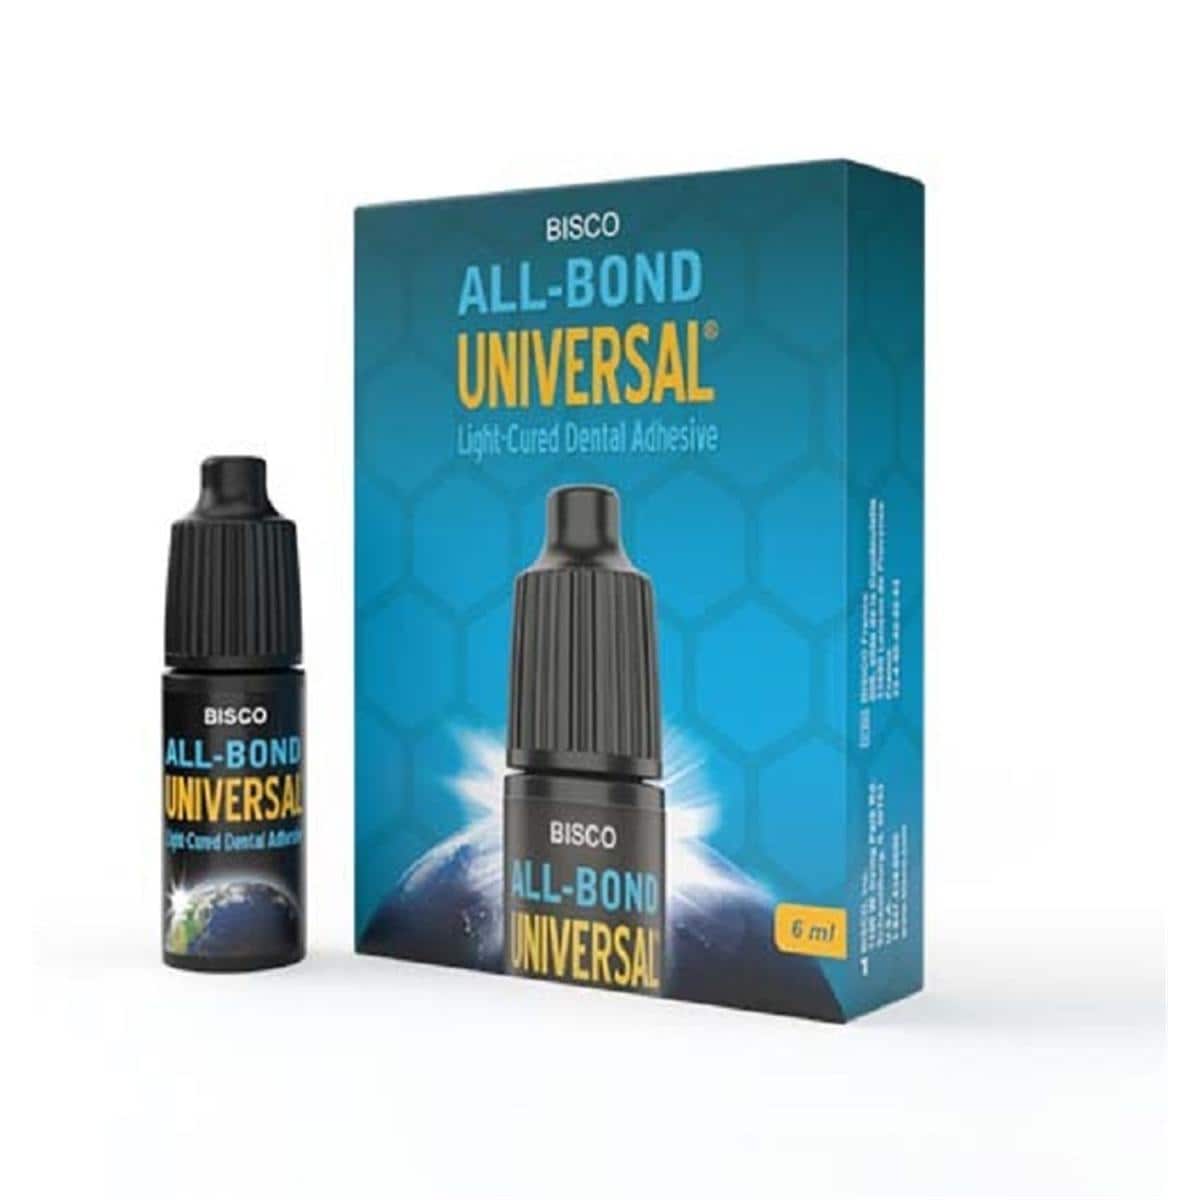 All-Bond Universal - Recharge, 6 ml